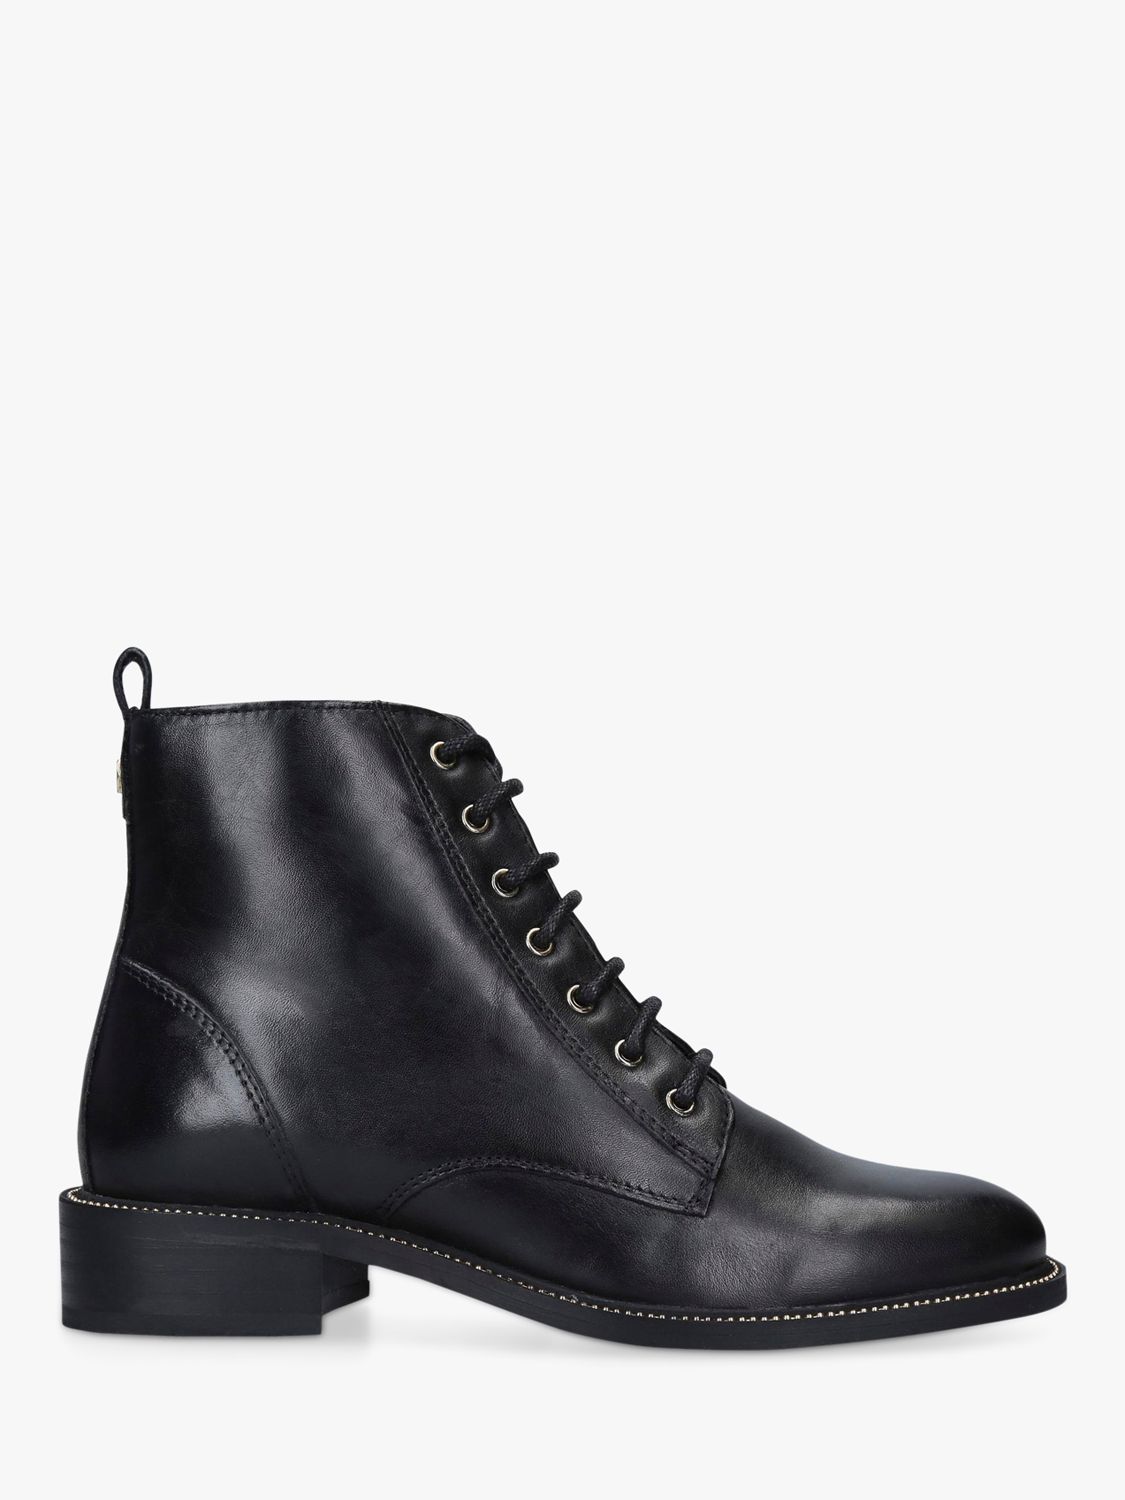 Carvela Spike Stud Detail Leather Ankle Boots, Black at John Lewis &  Partners